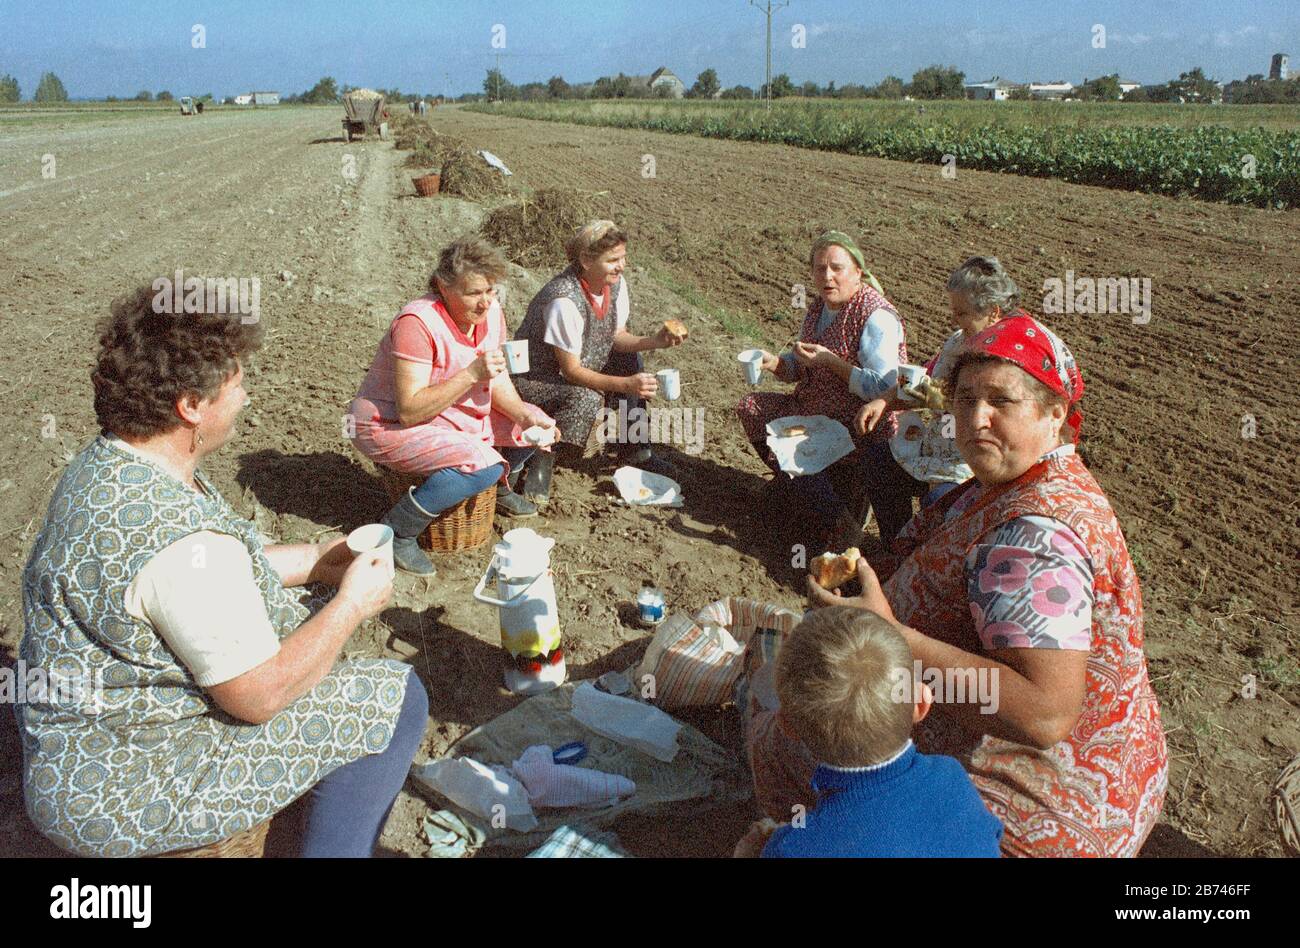 01 January 1993, Poland, Polen: Members of the German-speaking minority in Upper Silesia/Poland take a break during the potato harvest in the fields. Photo: Paul Glaser/dpa-Zentralbild/ZB Stock Photo